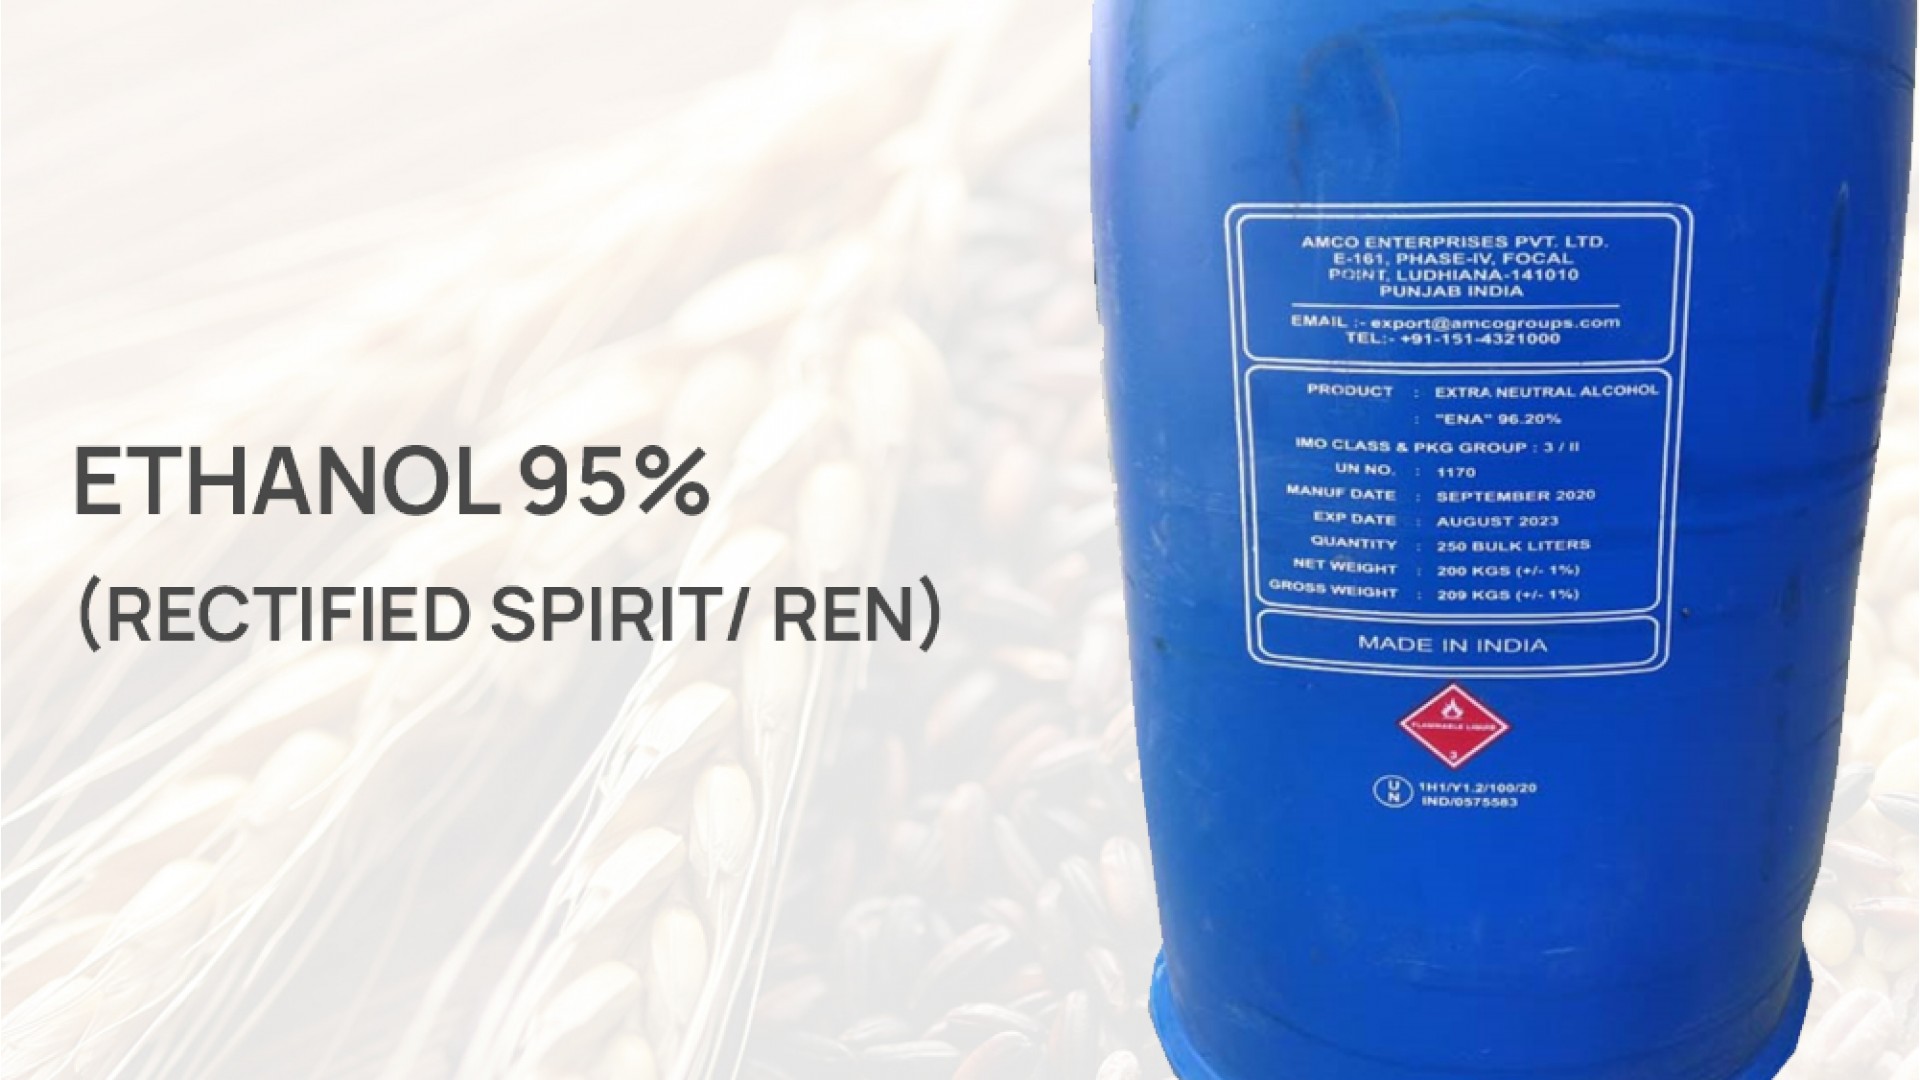 Ethanol 95% (Rectified Spirit/ REN)